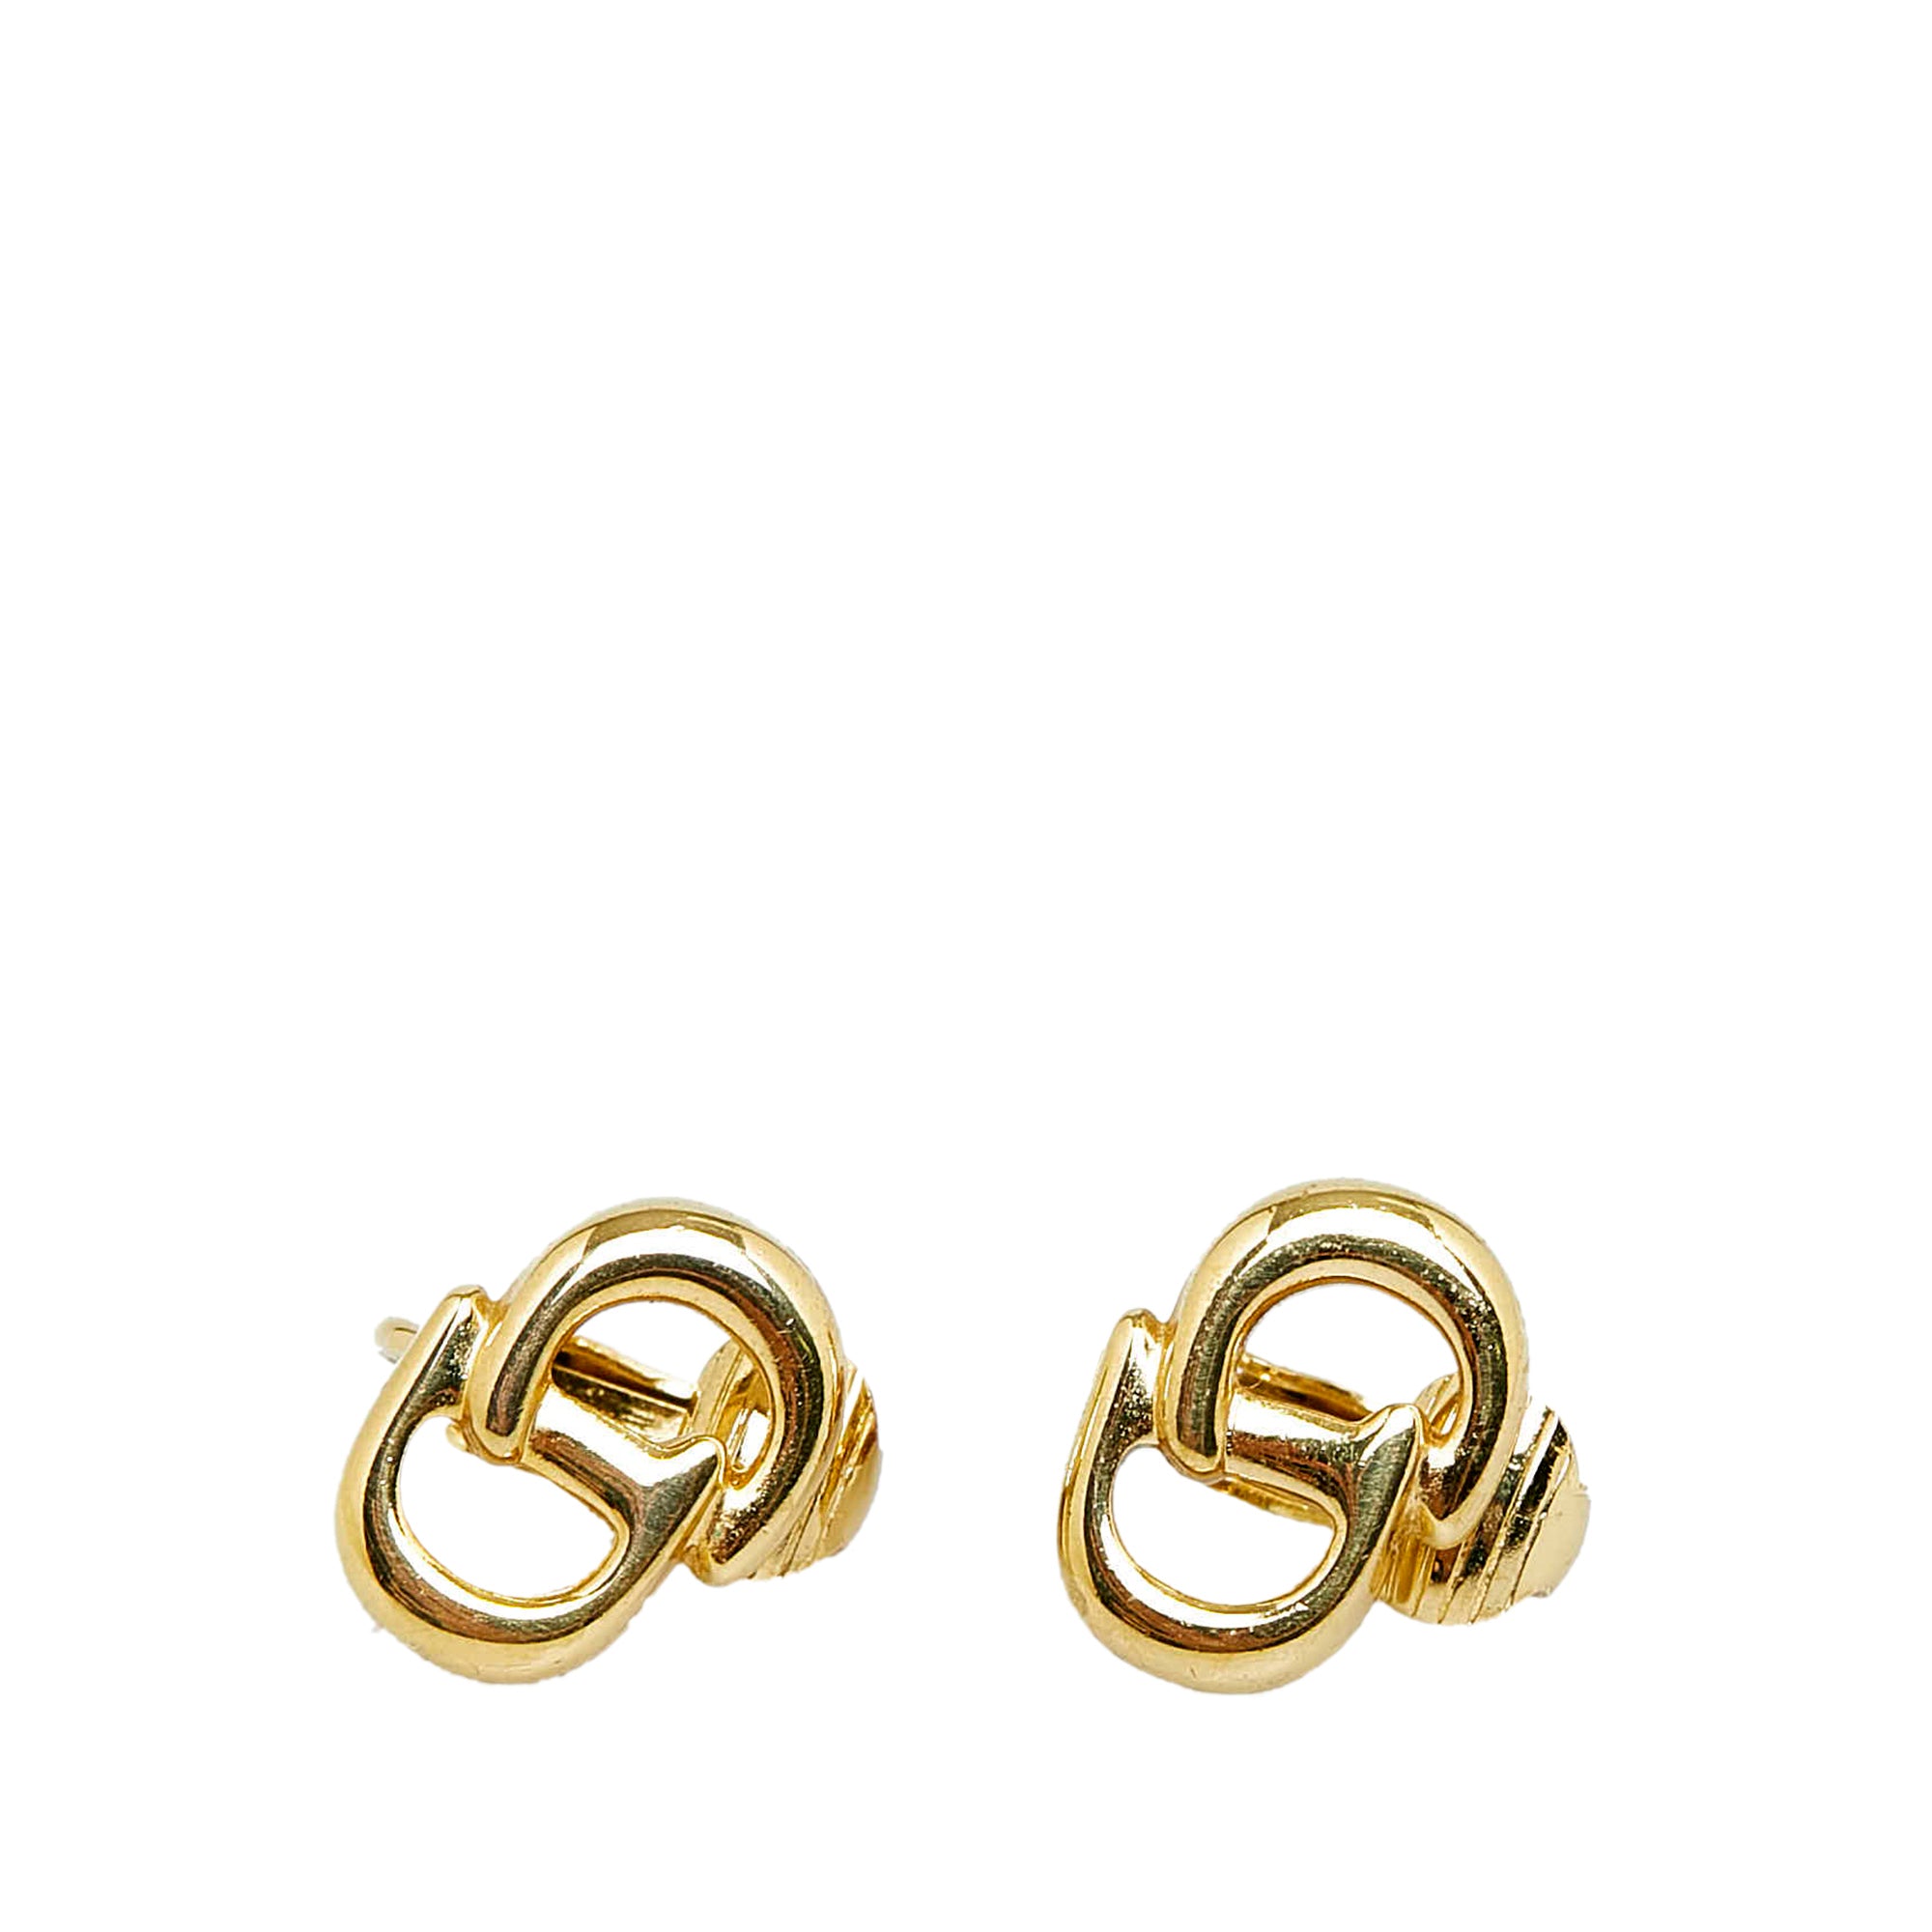 Louis Vuitton Clover Earrings - Gold-Tone Metal Hoop, Earrings